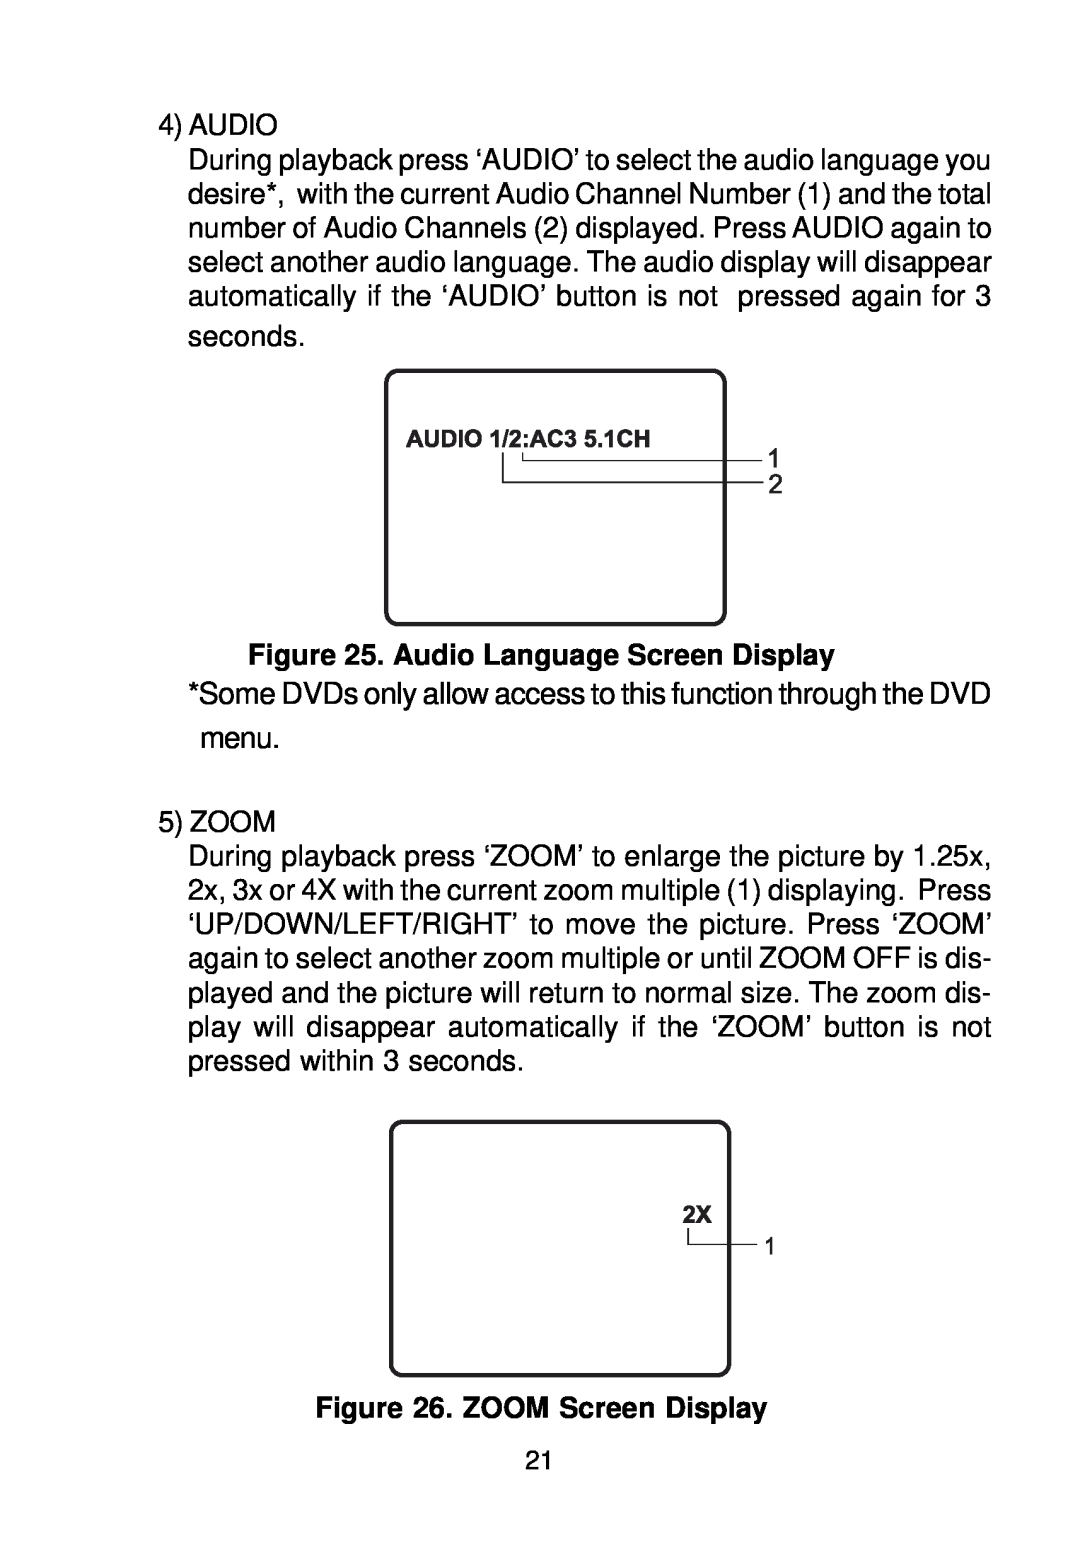 Audiovox VBP58 manual Audio Language Screen Display, ZOOM Screen Display 